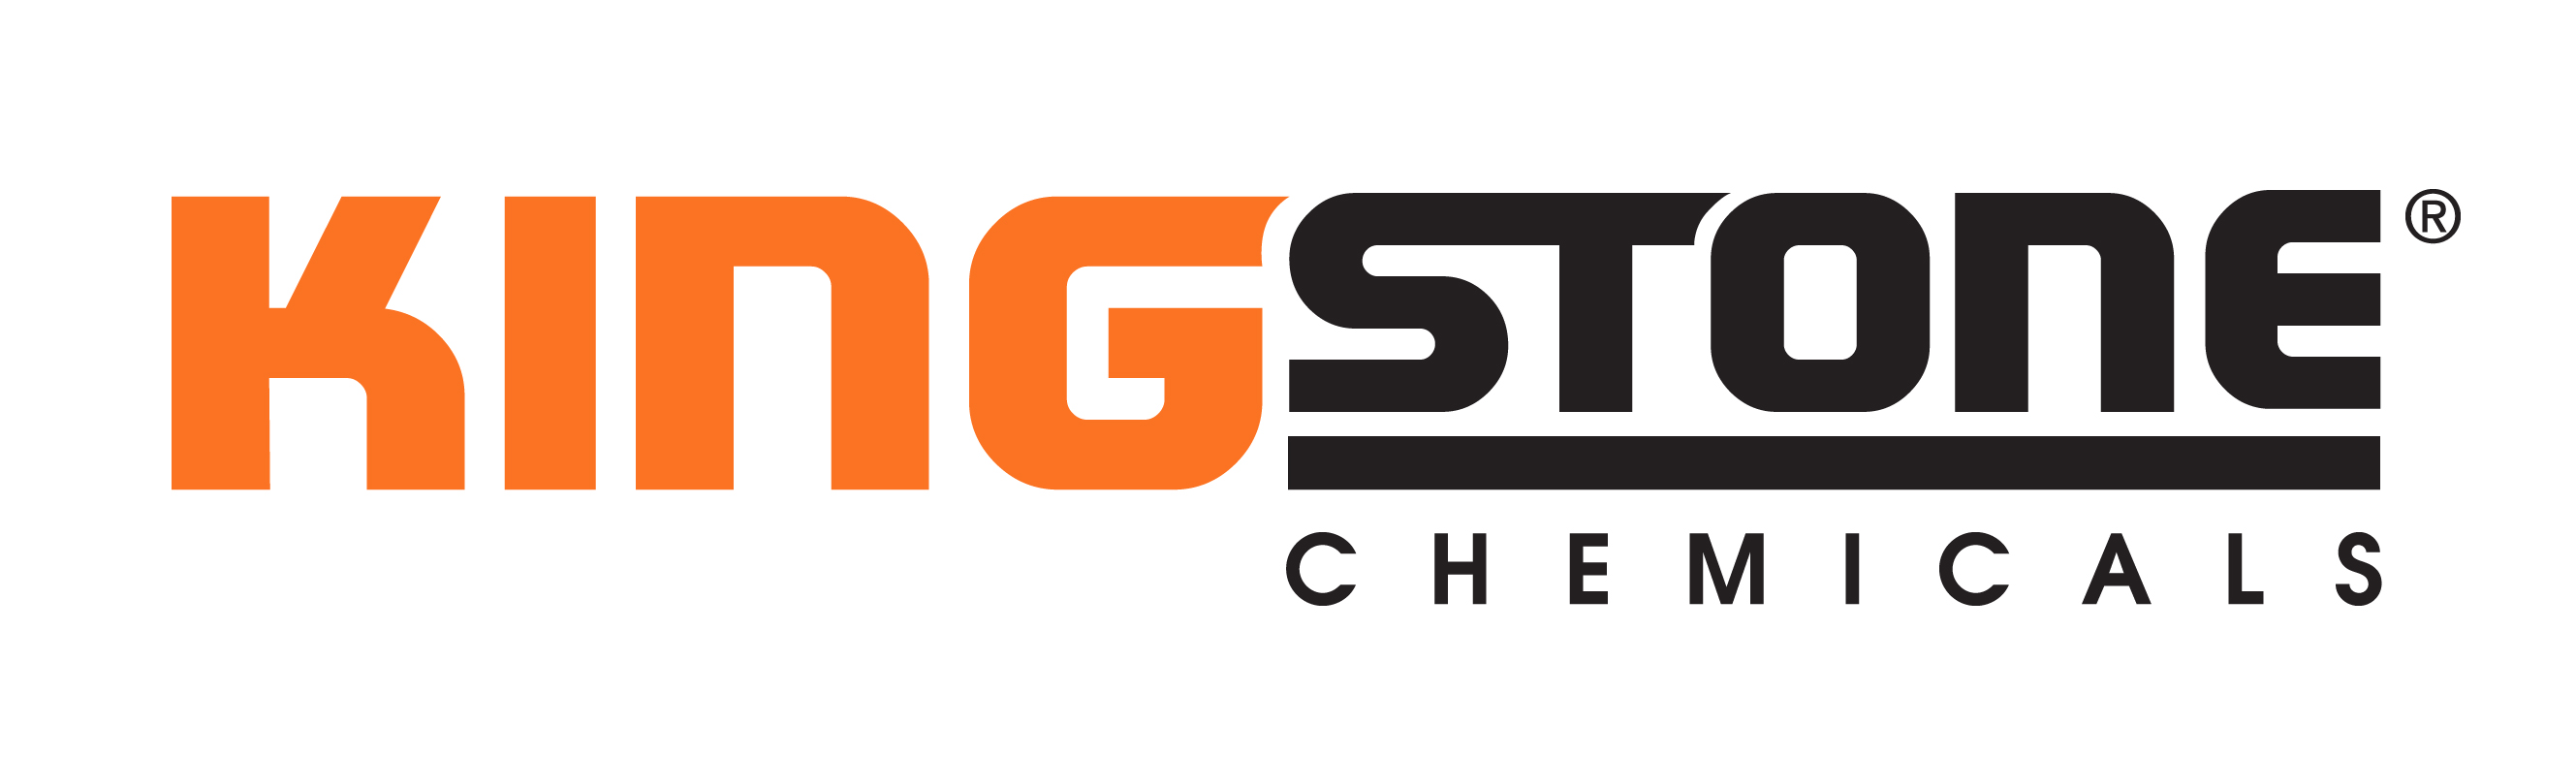 kingstone logo